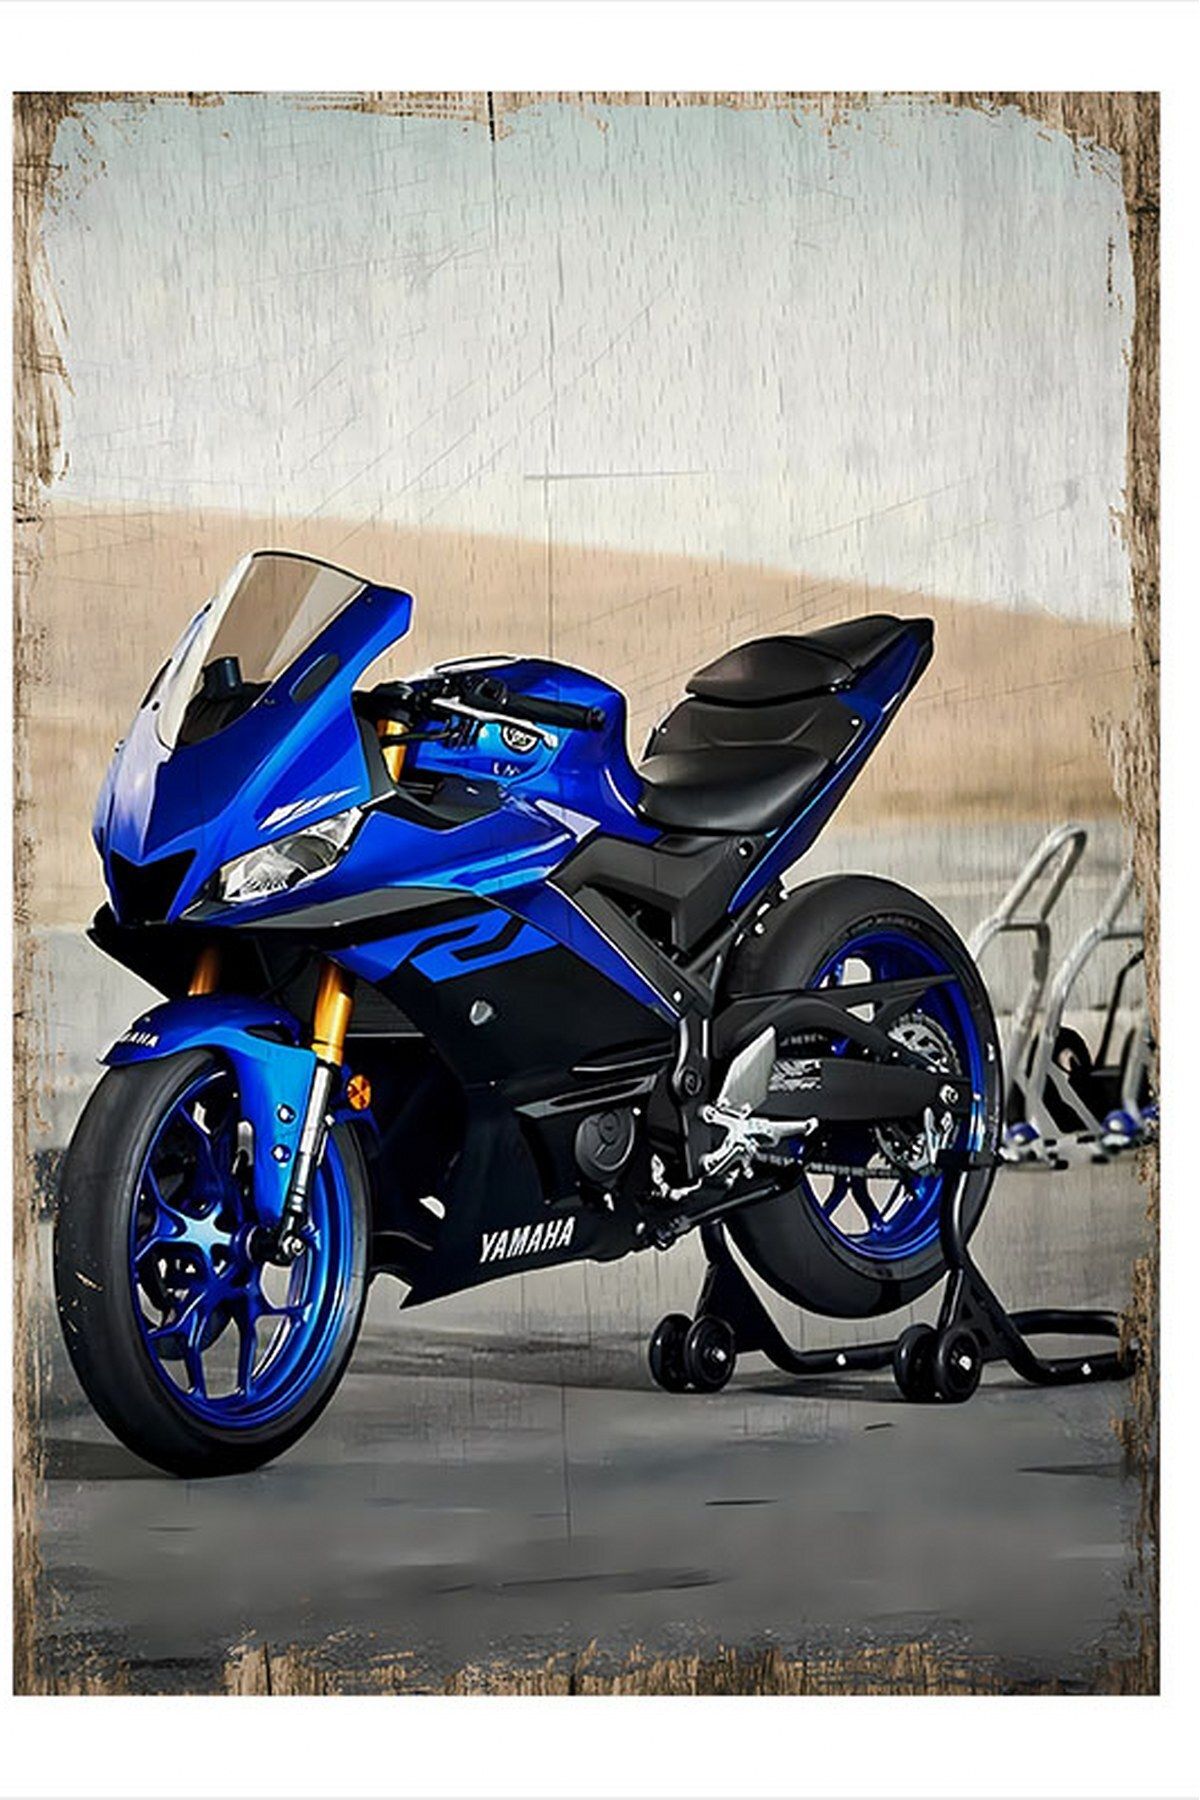 Teknomeg Karizma Tablo Yamaha Motosiklet Art Mdf Poster 18cm X 27cm